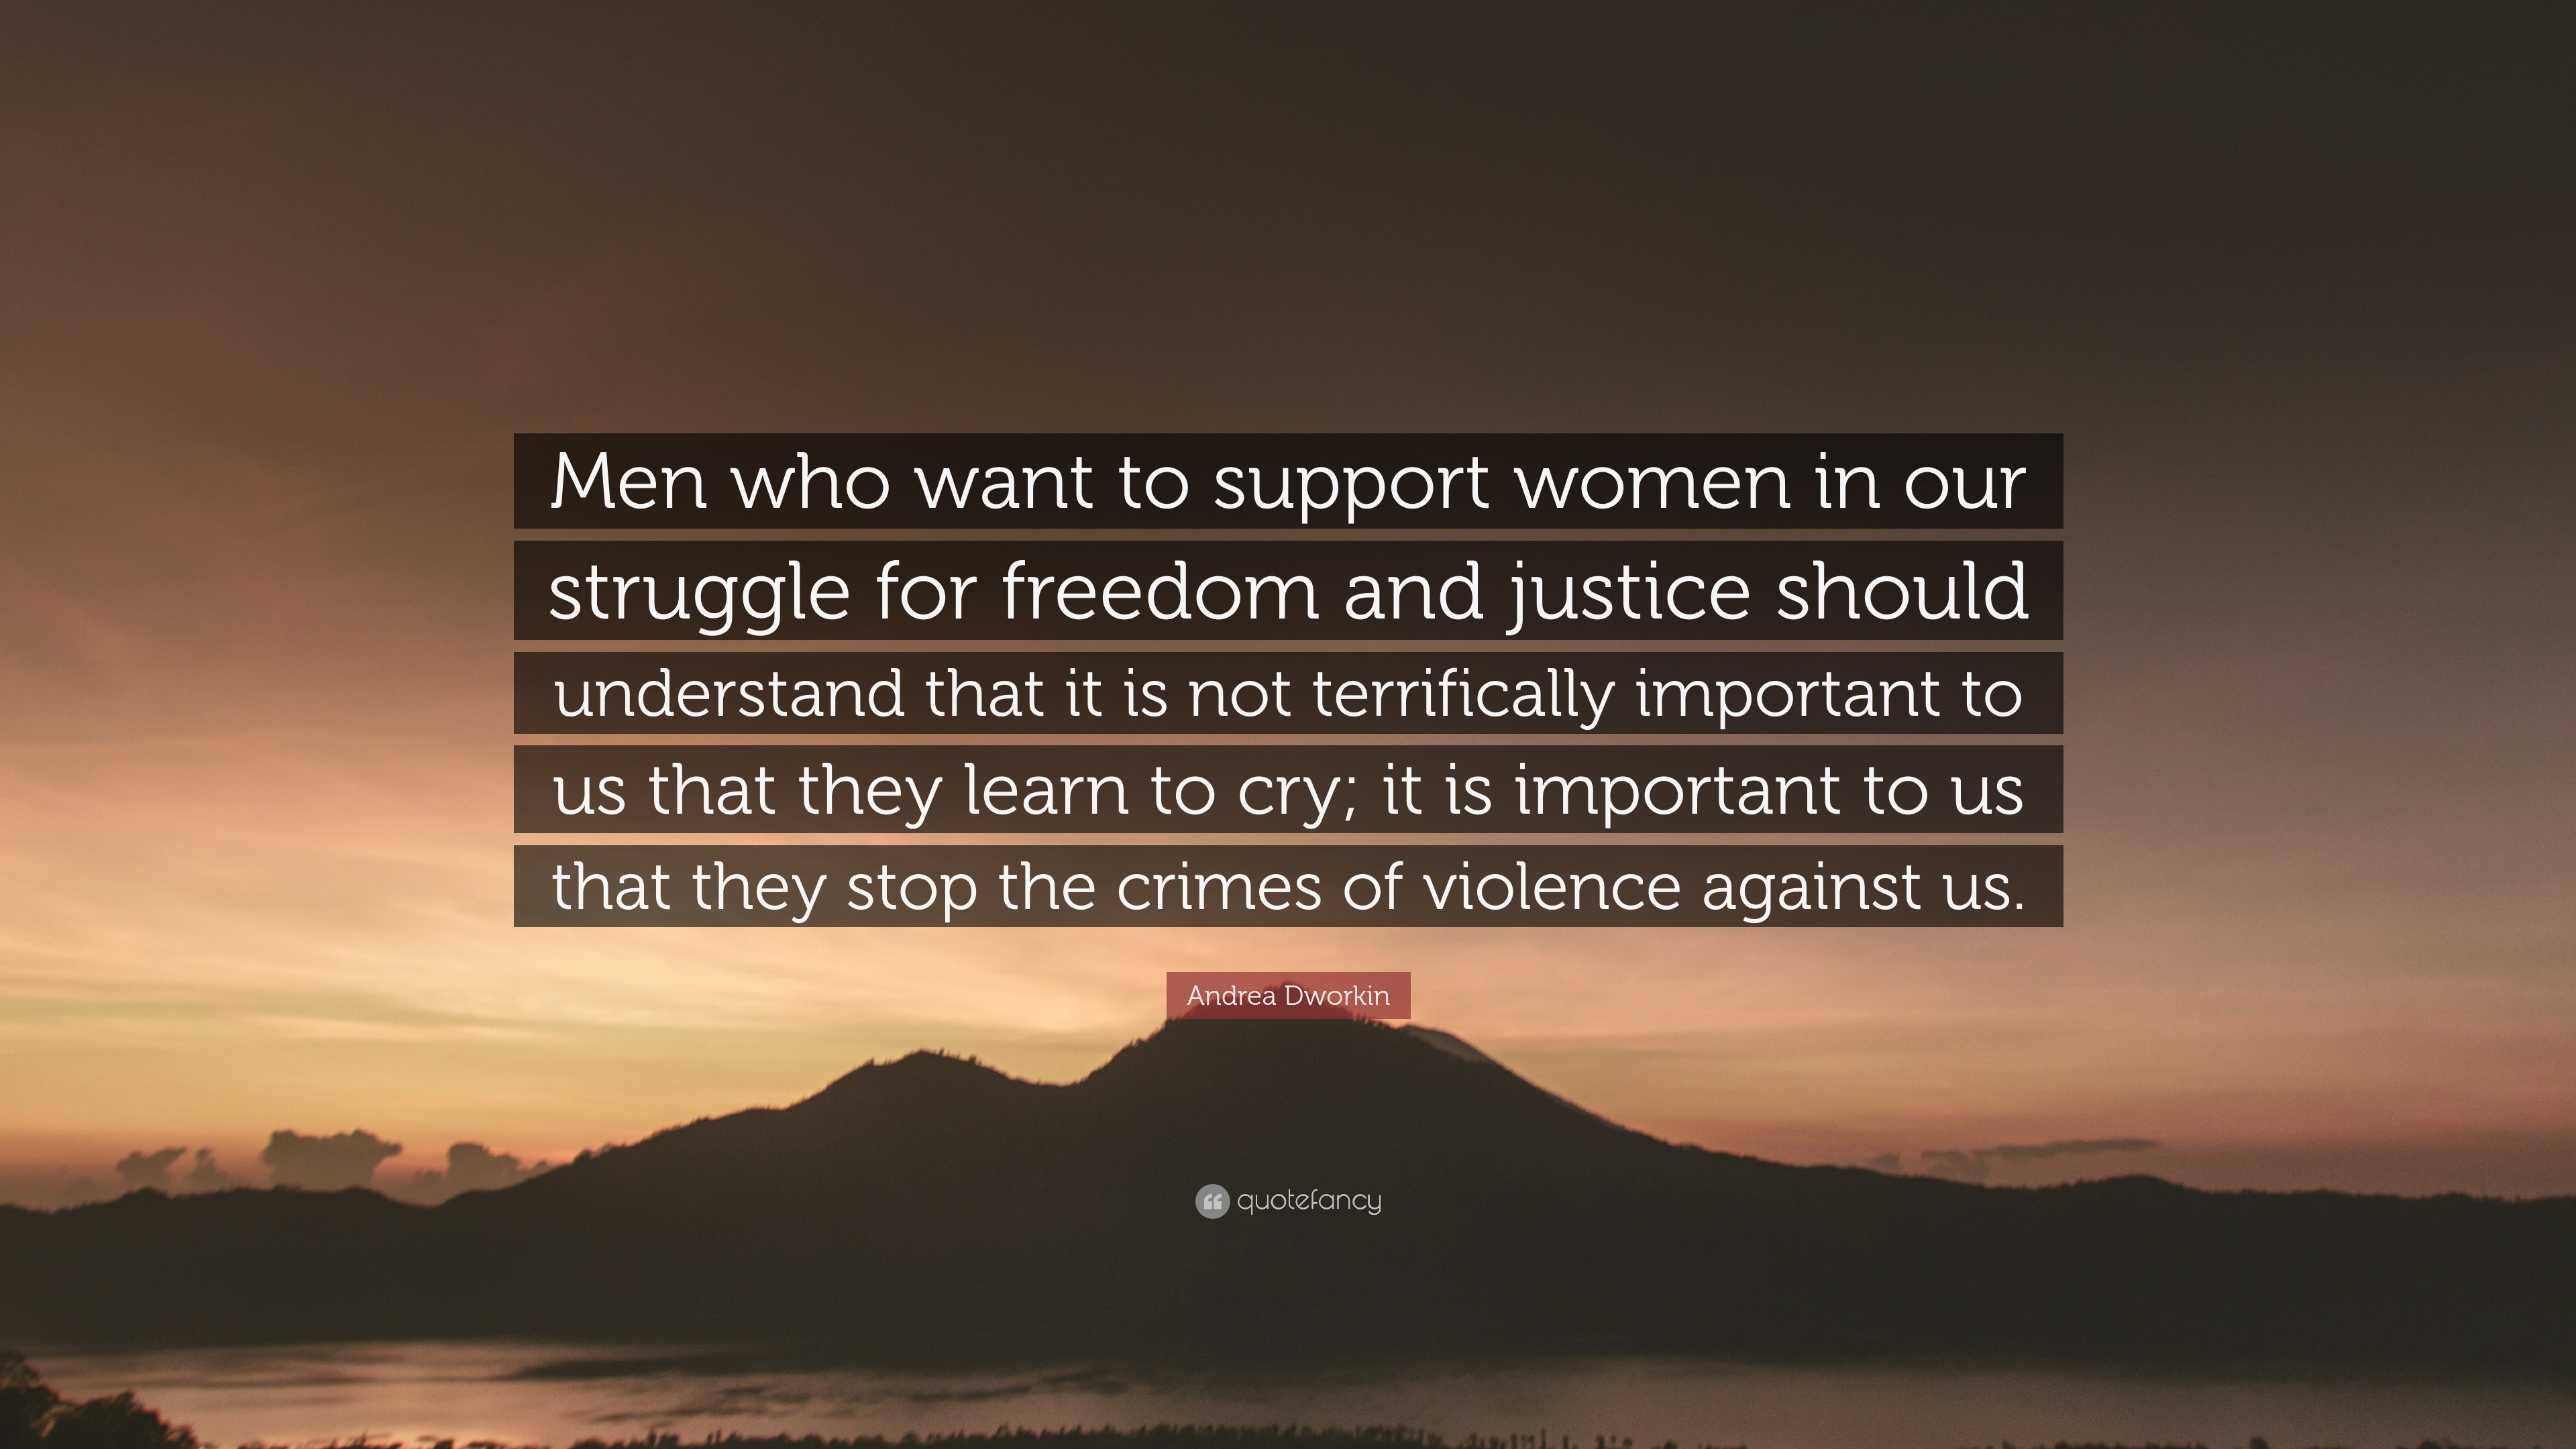 Andrea Dworkin quote: I love, cherish, and respect women in my